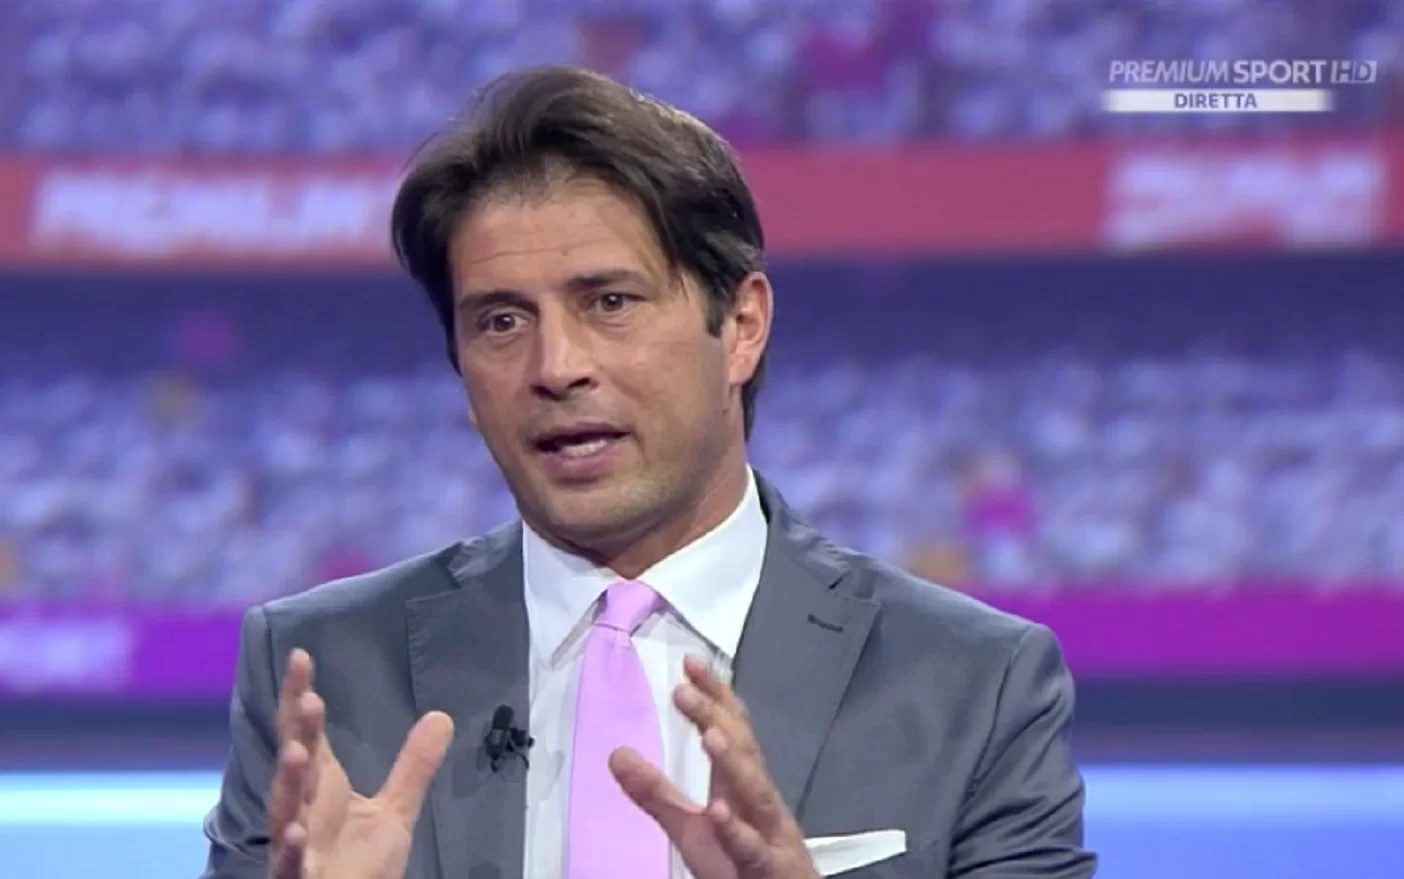 Tacchinardi è sicuro: “La Juventus batterà l’Inter. Il derby d’Italia è una partita veramente speciale”